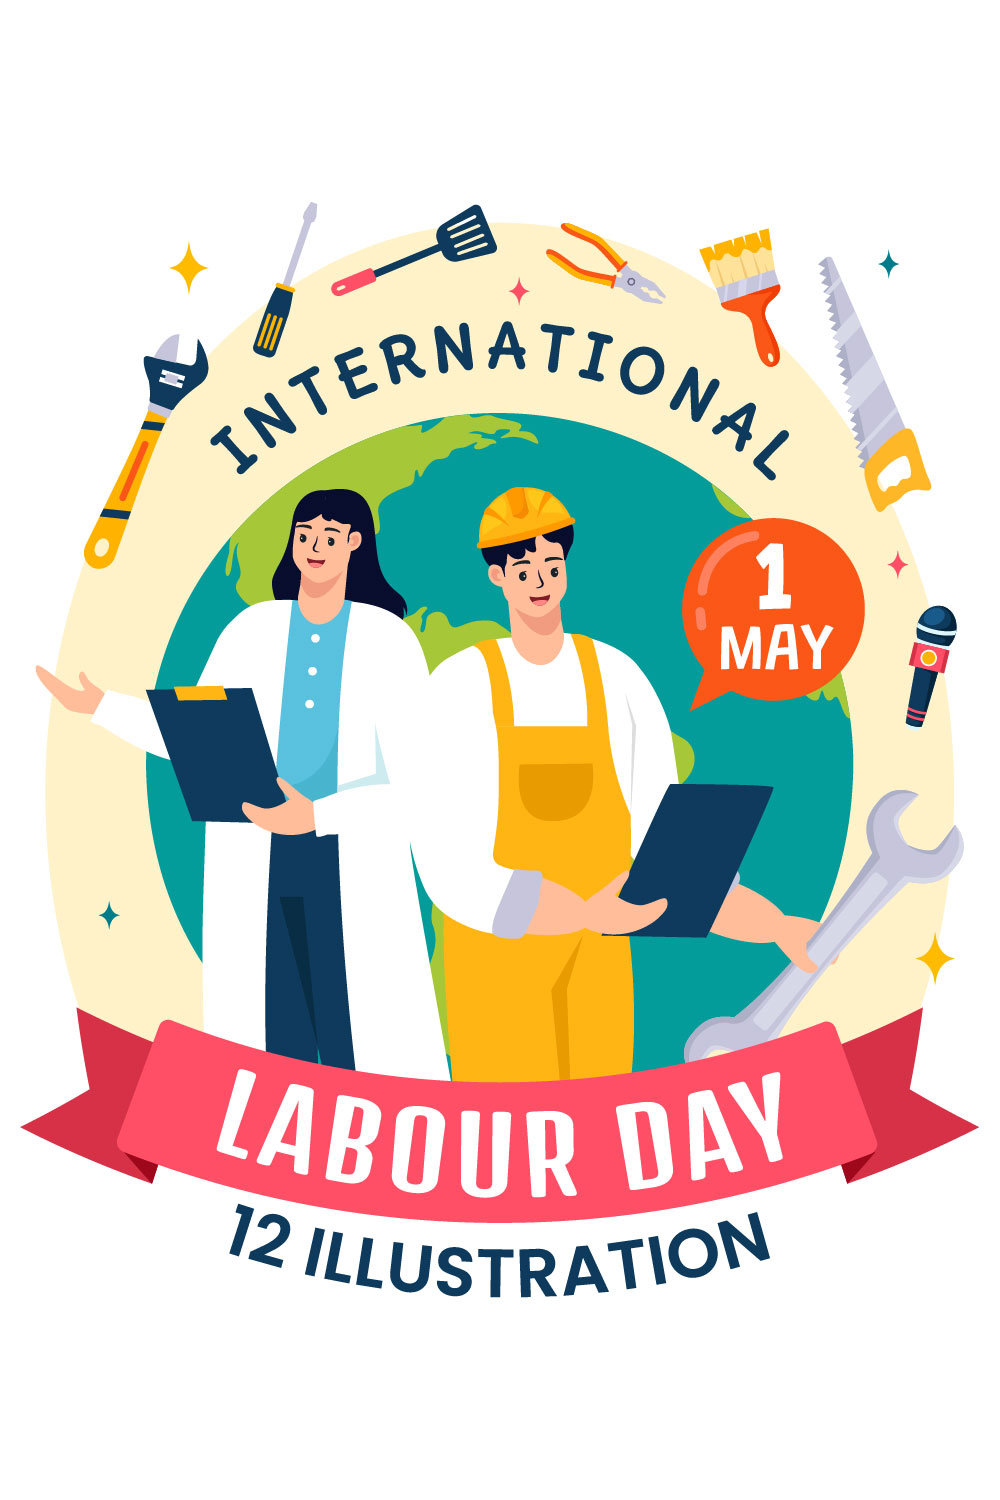 12 International Labor Day Illustration pinterest preview image.